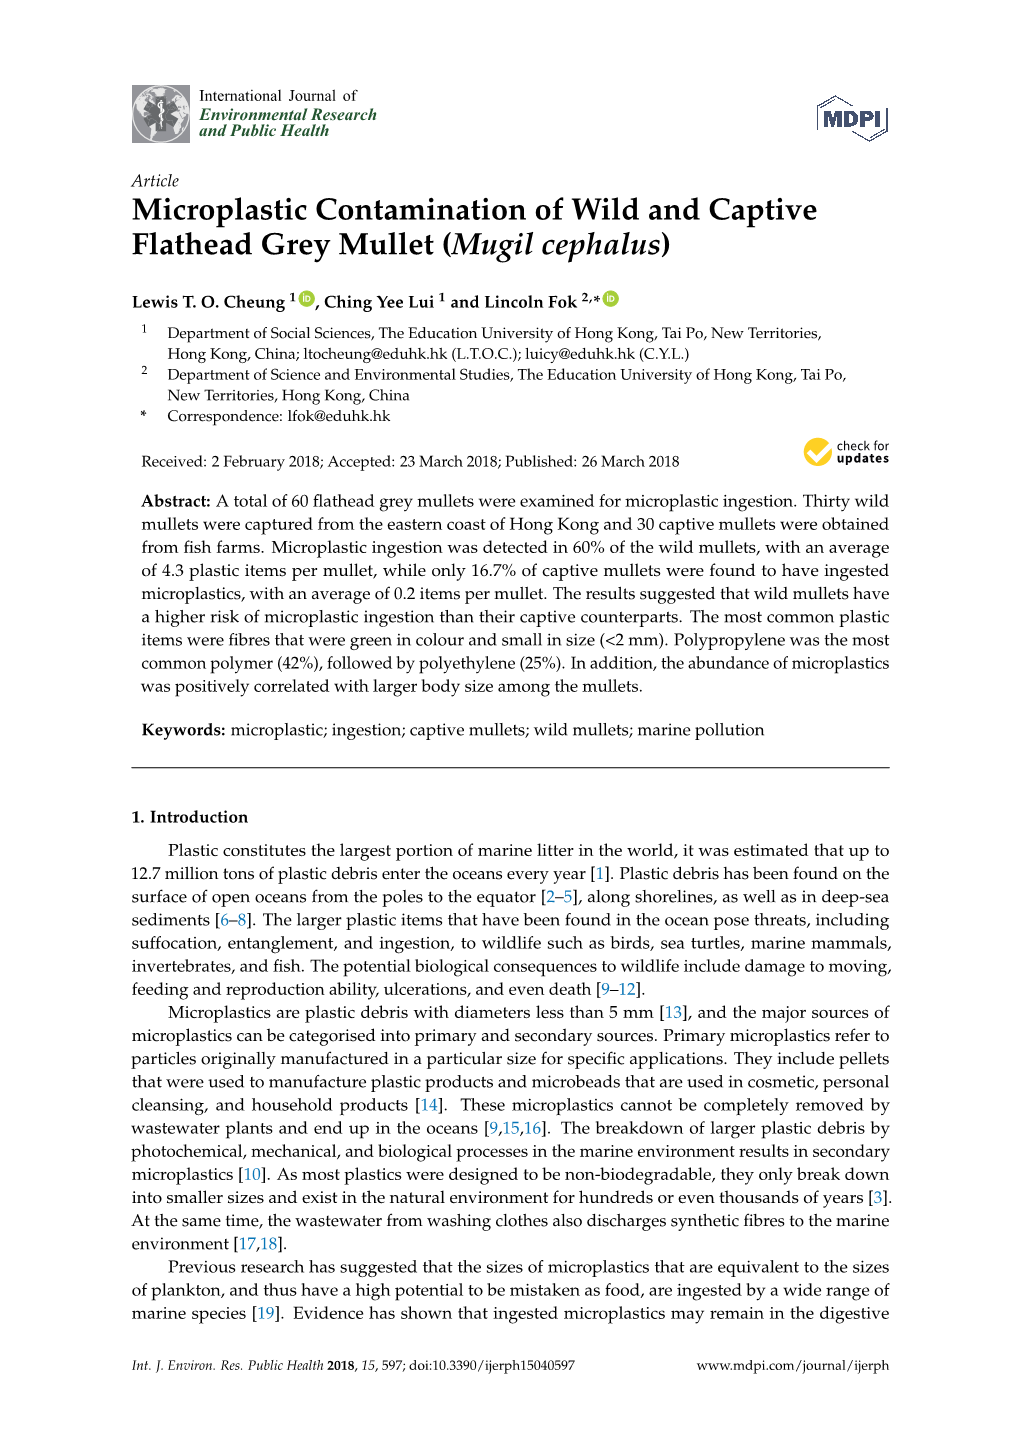 Microplastic Contamination of Wild and Captive Flathead Grey Mullet (Mugil Cephalus)